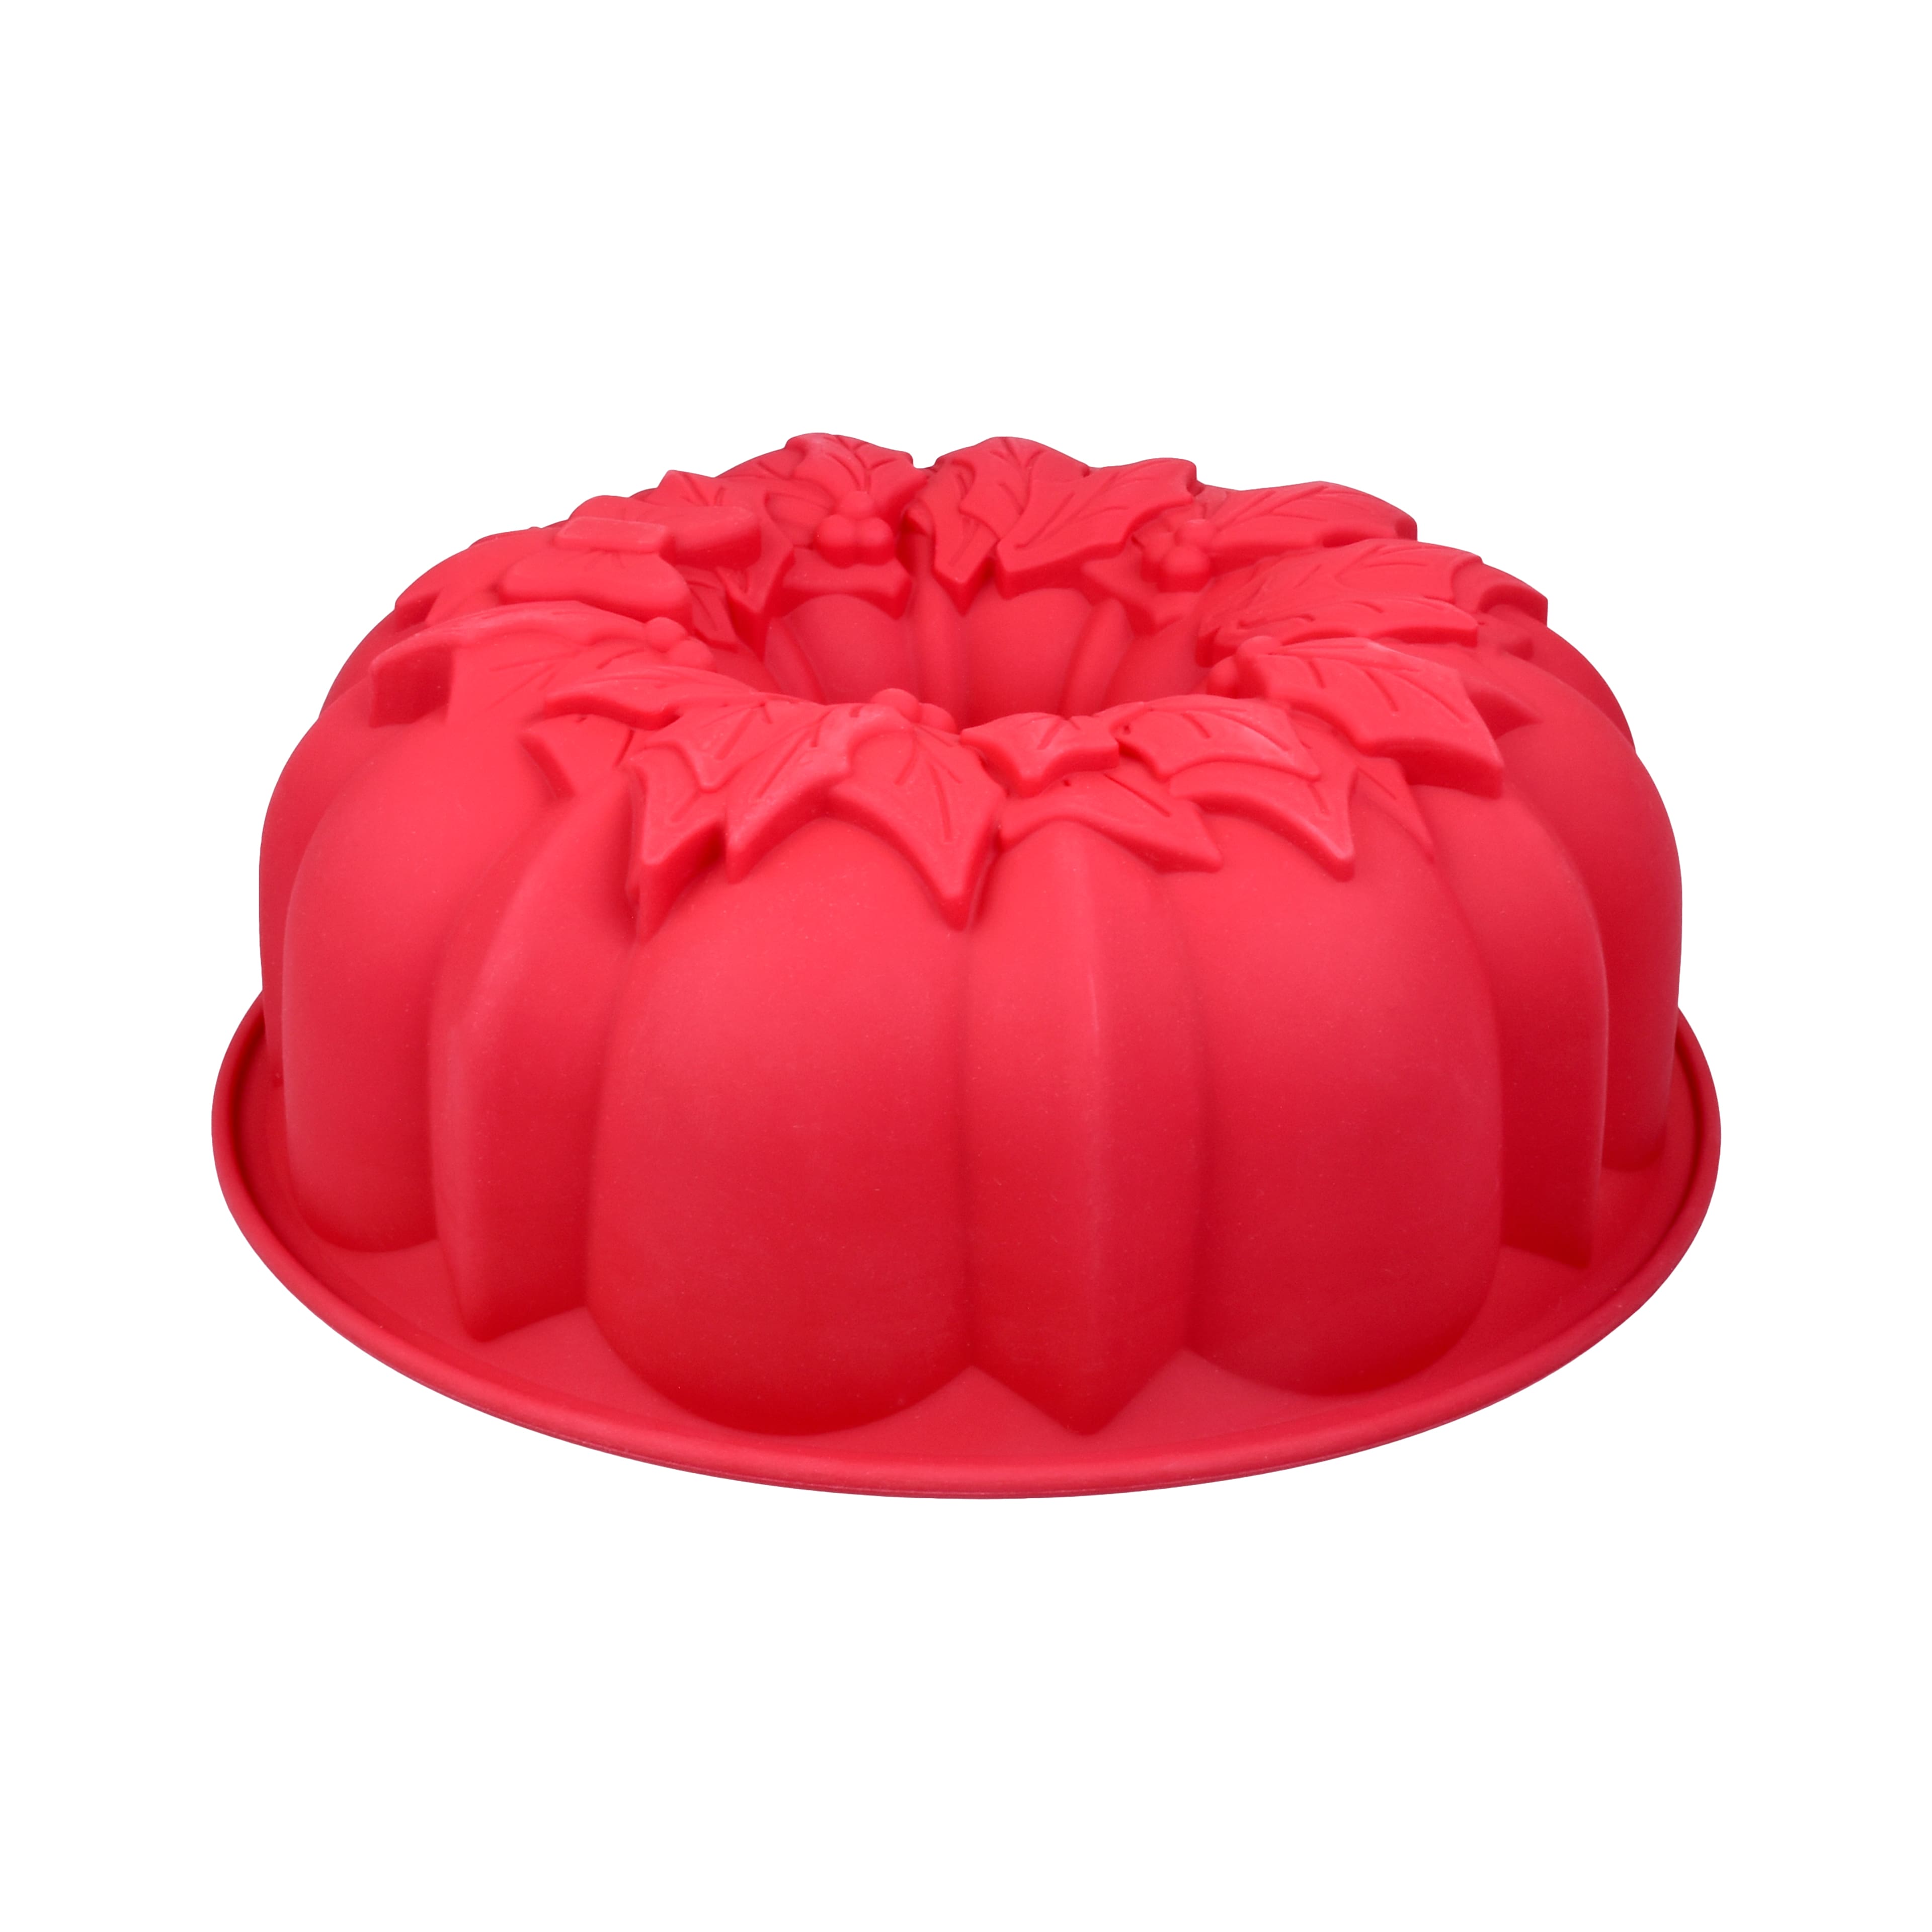 Bundt Cake Silicone Mold by Celebrate It®